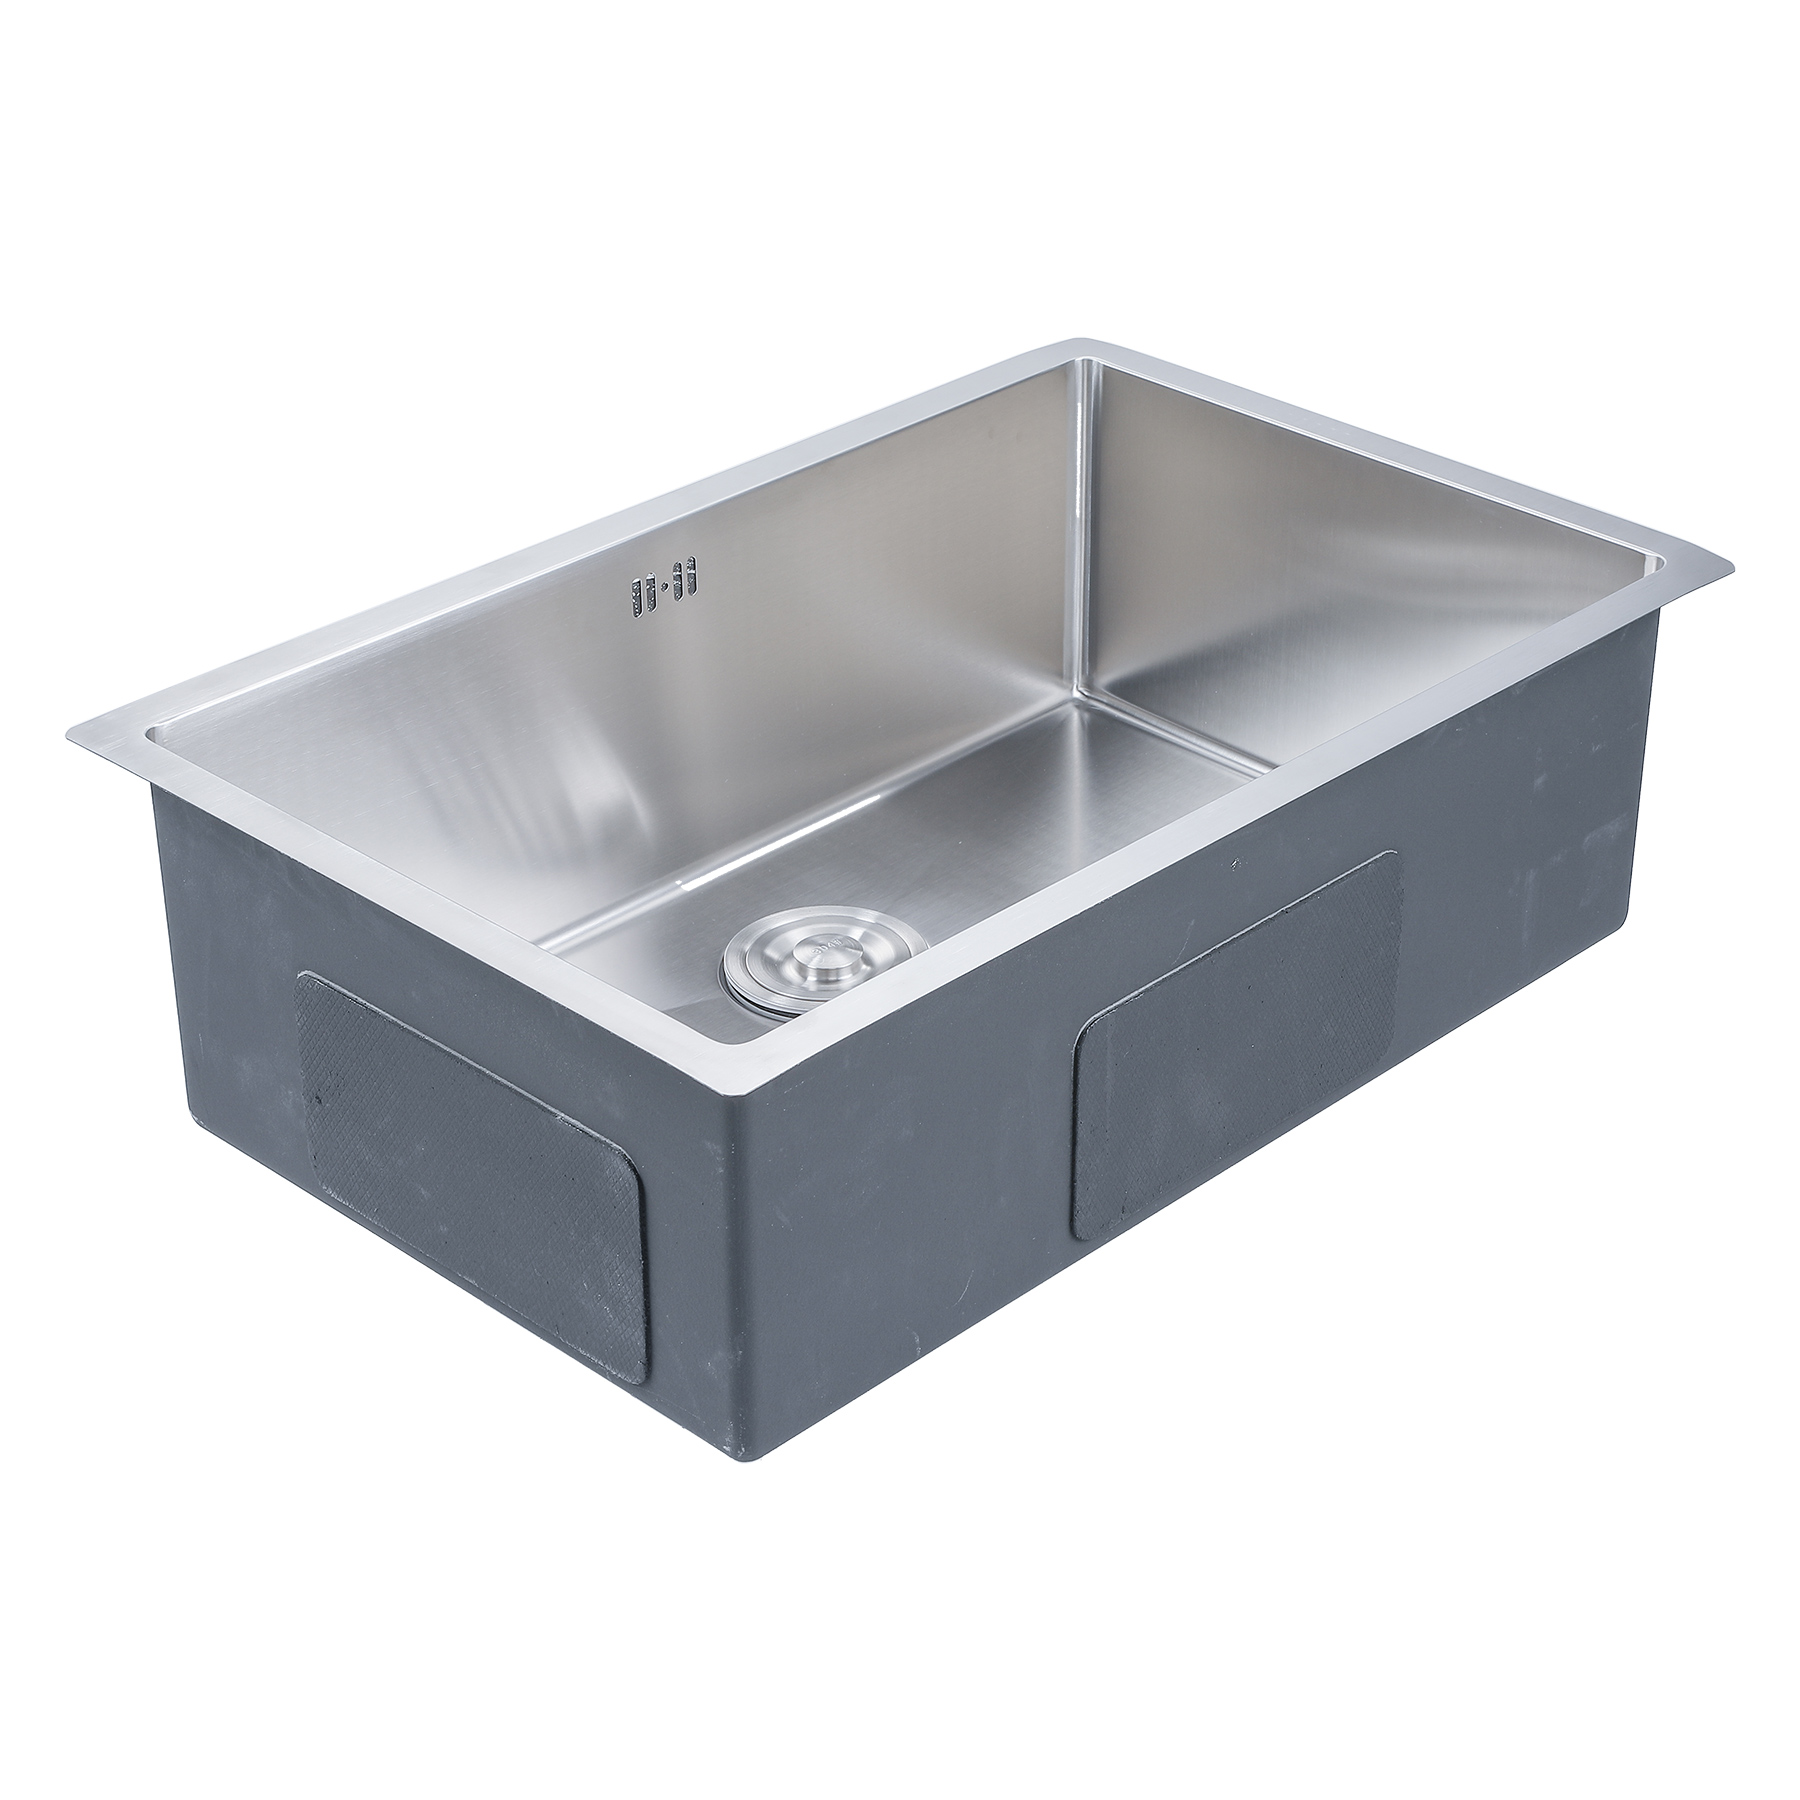 18 Gauge Kitchen Sink Undermount Single Bowl Stainless Steel - image 5 of 7